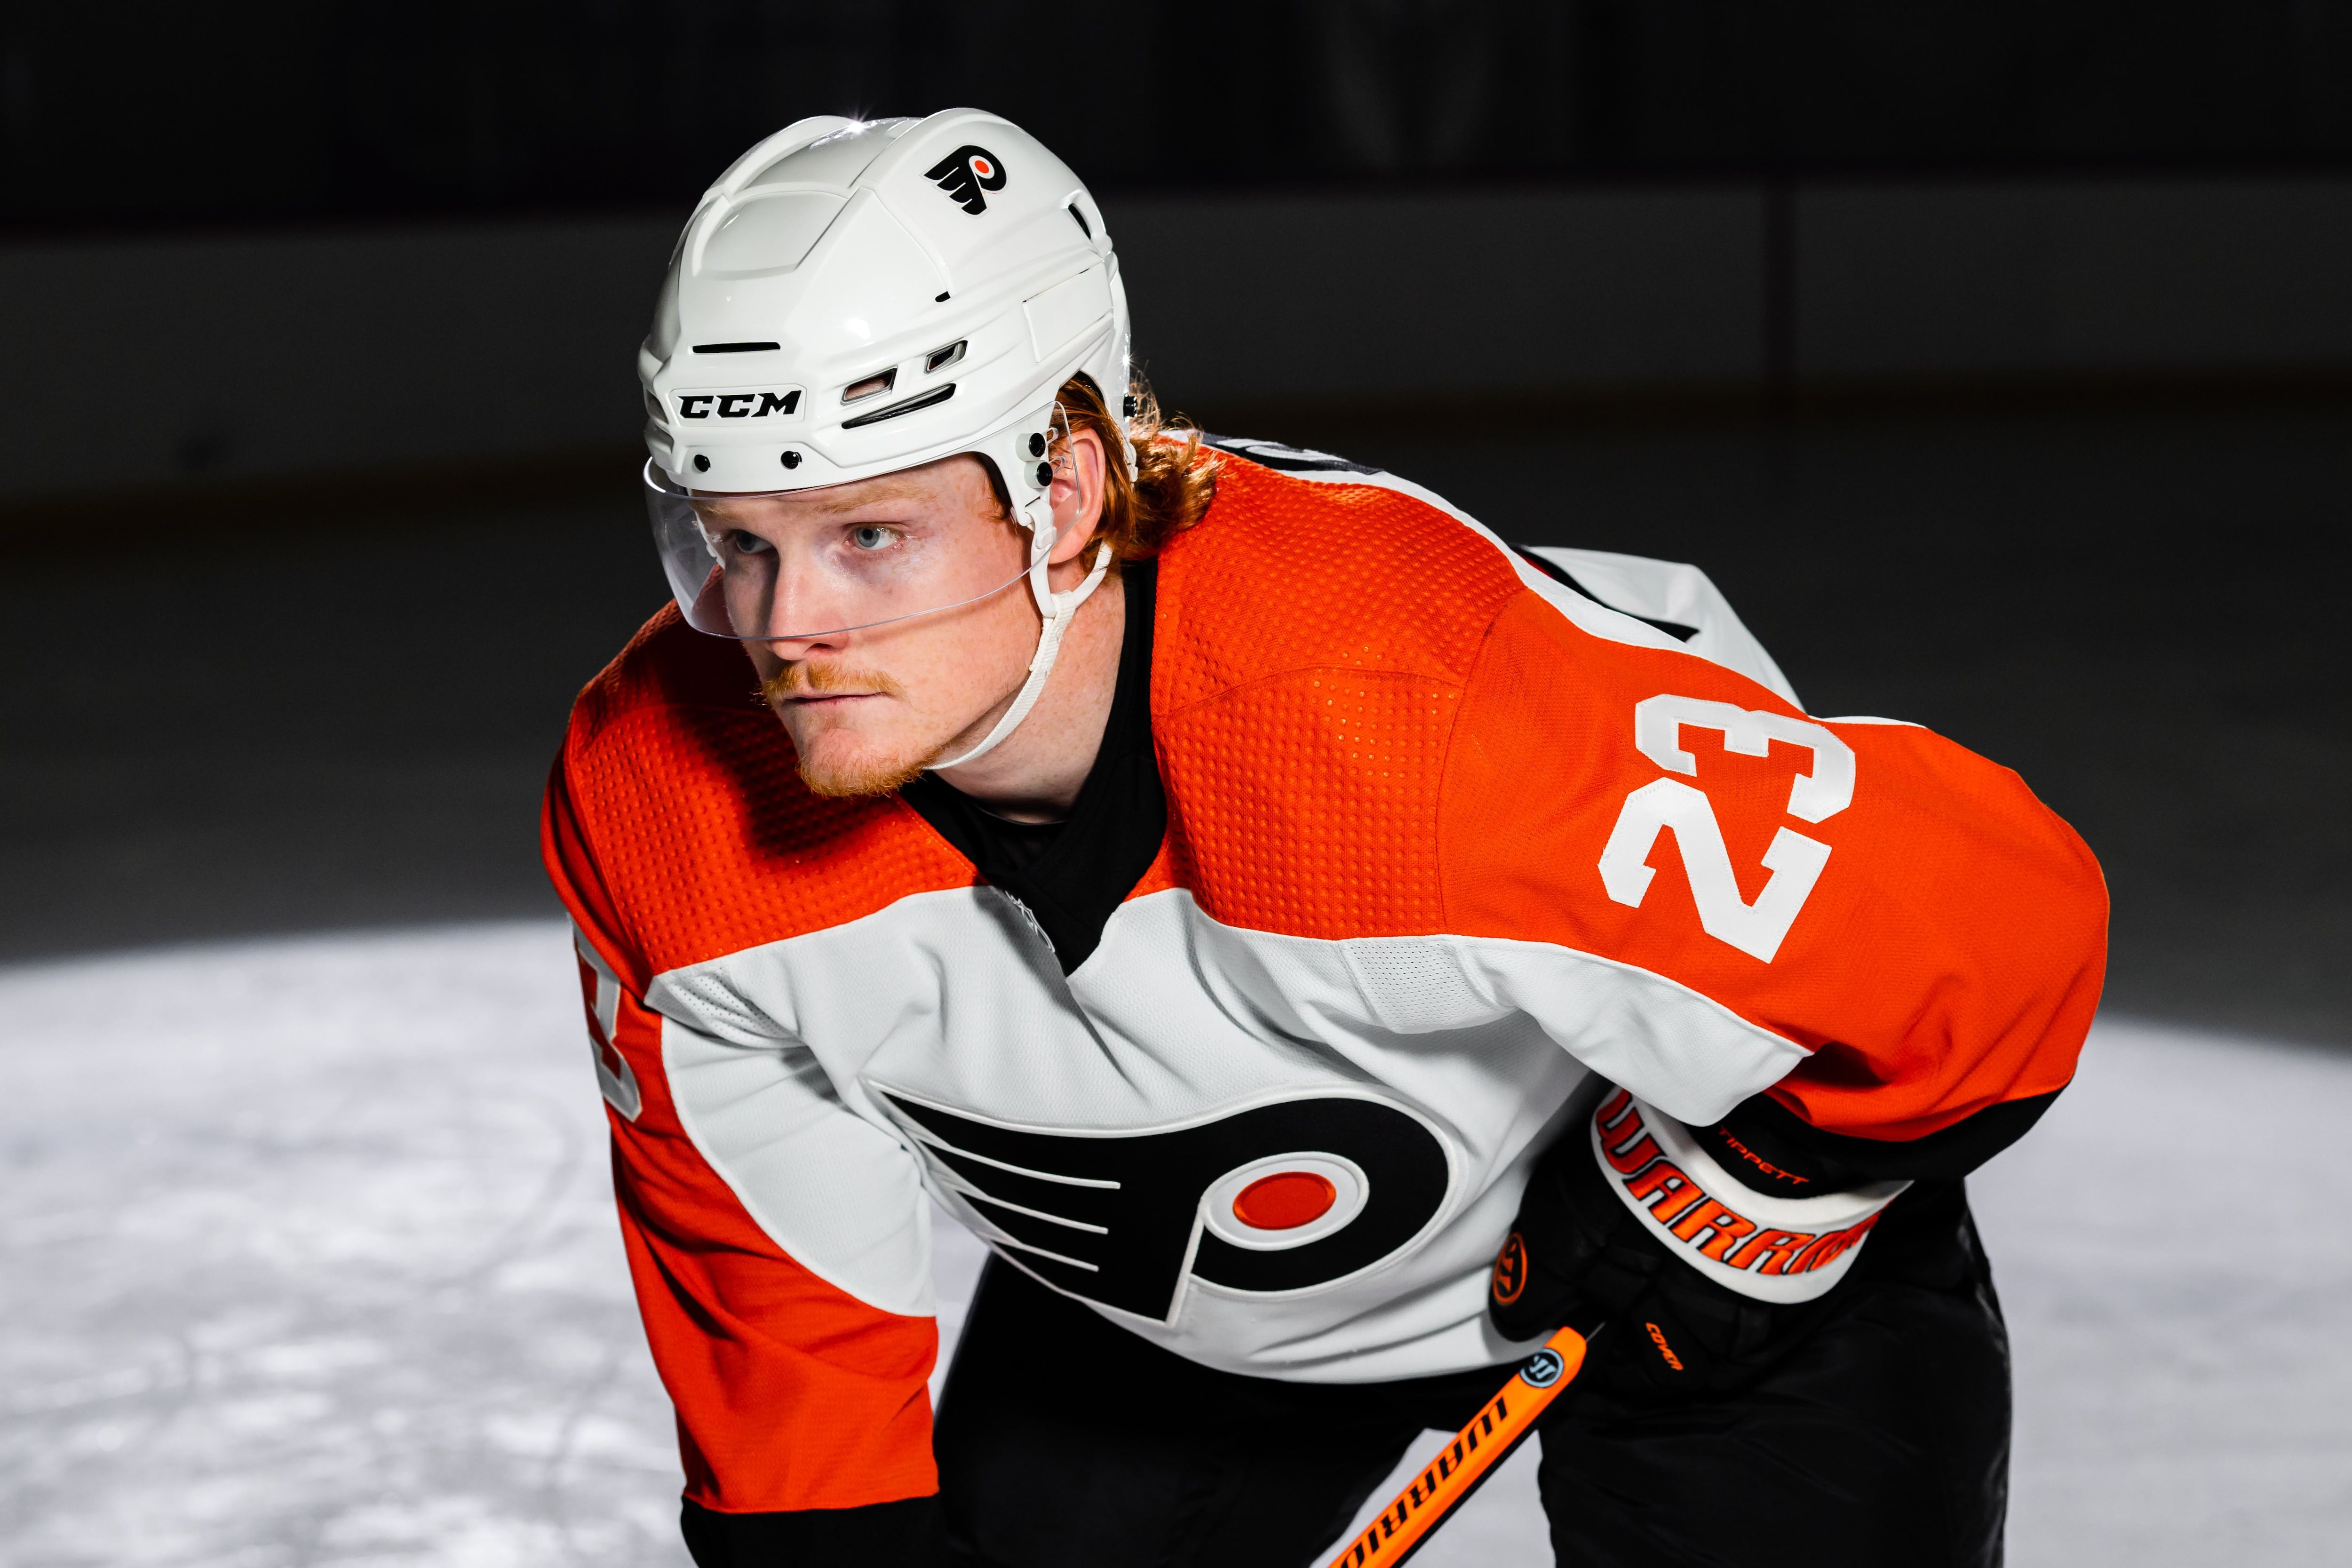 Philadelphia Flyers bring back “burnt orange” with new jerseys